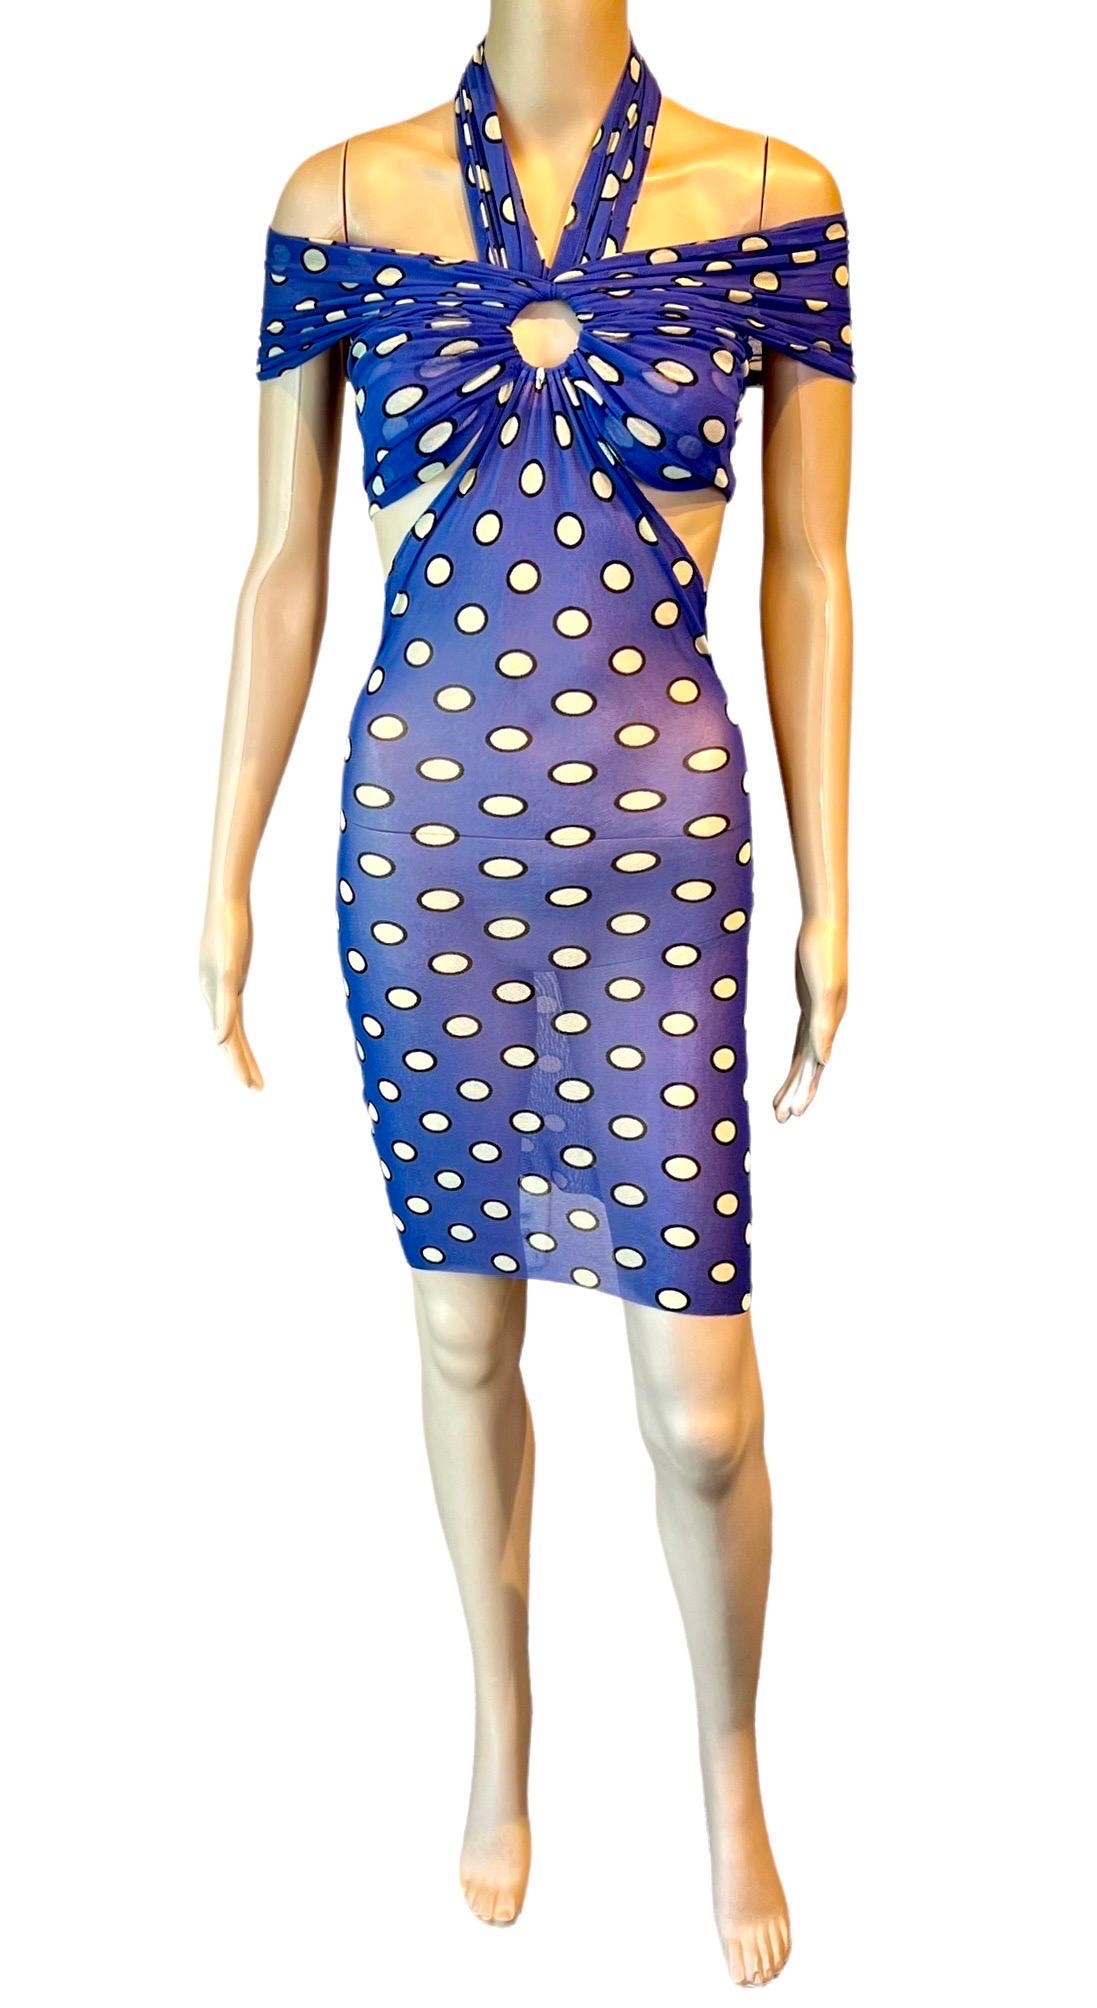 Jean Paul Gaultier Soleil S/S 1999 Cutout Polka Dot Mesh Bodycon Mini Dress For Sale 3